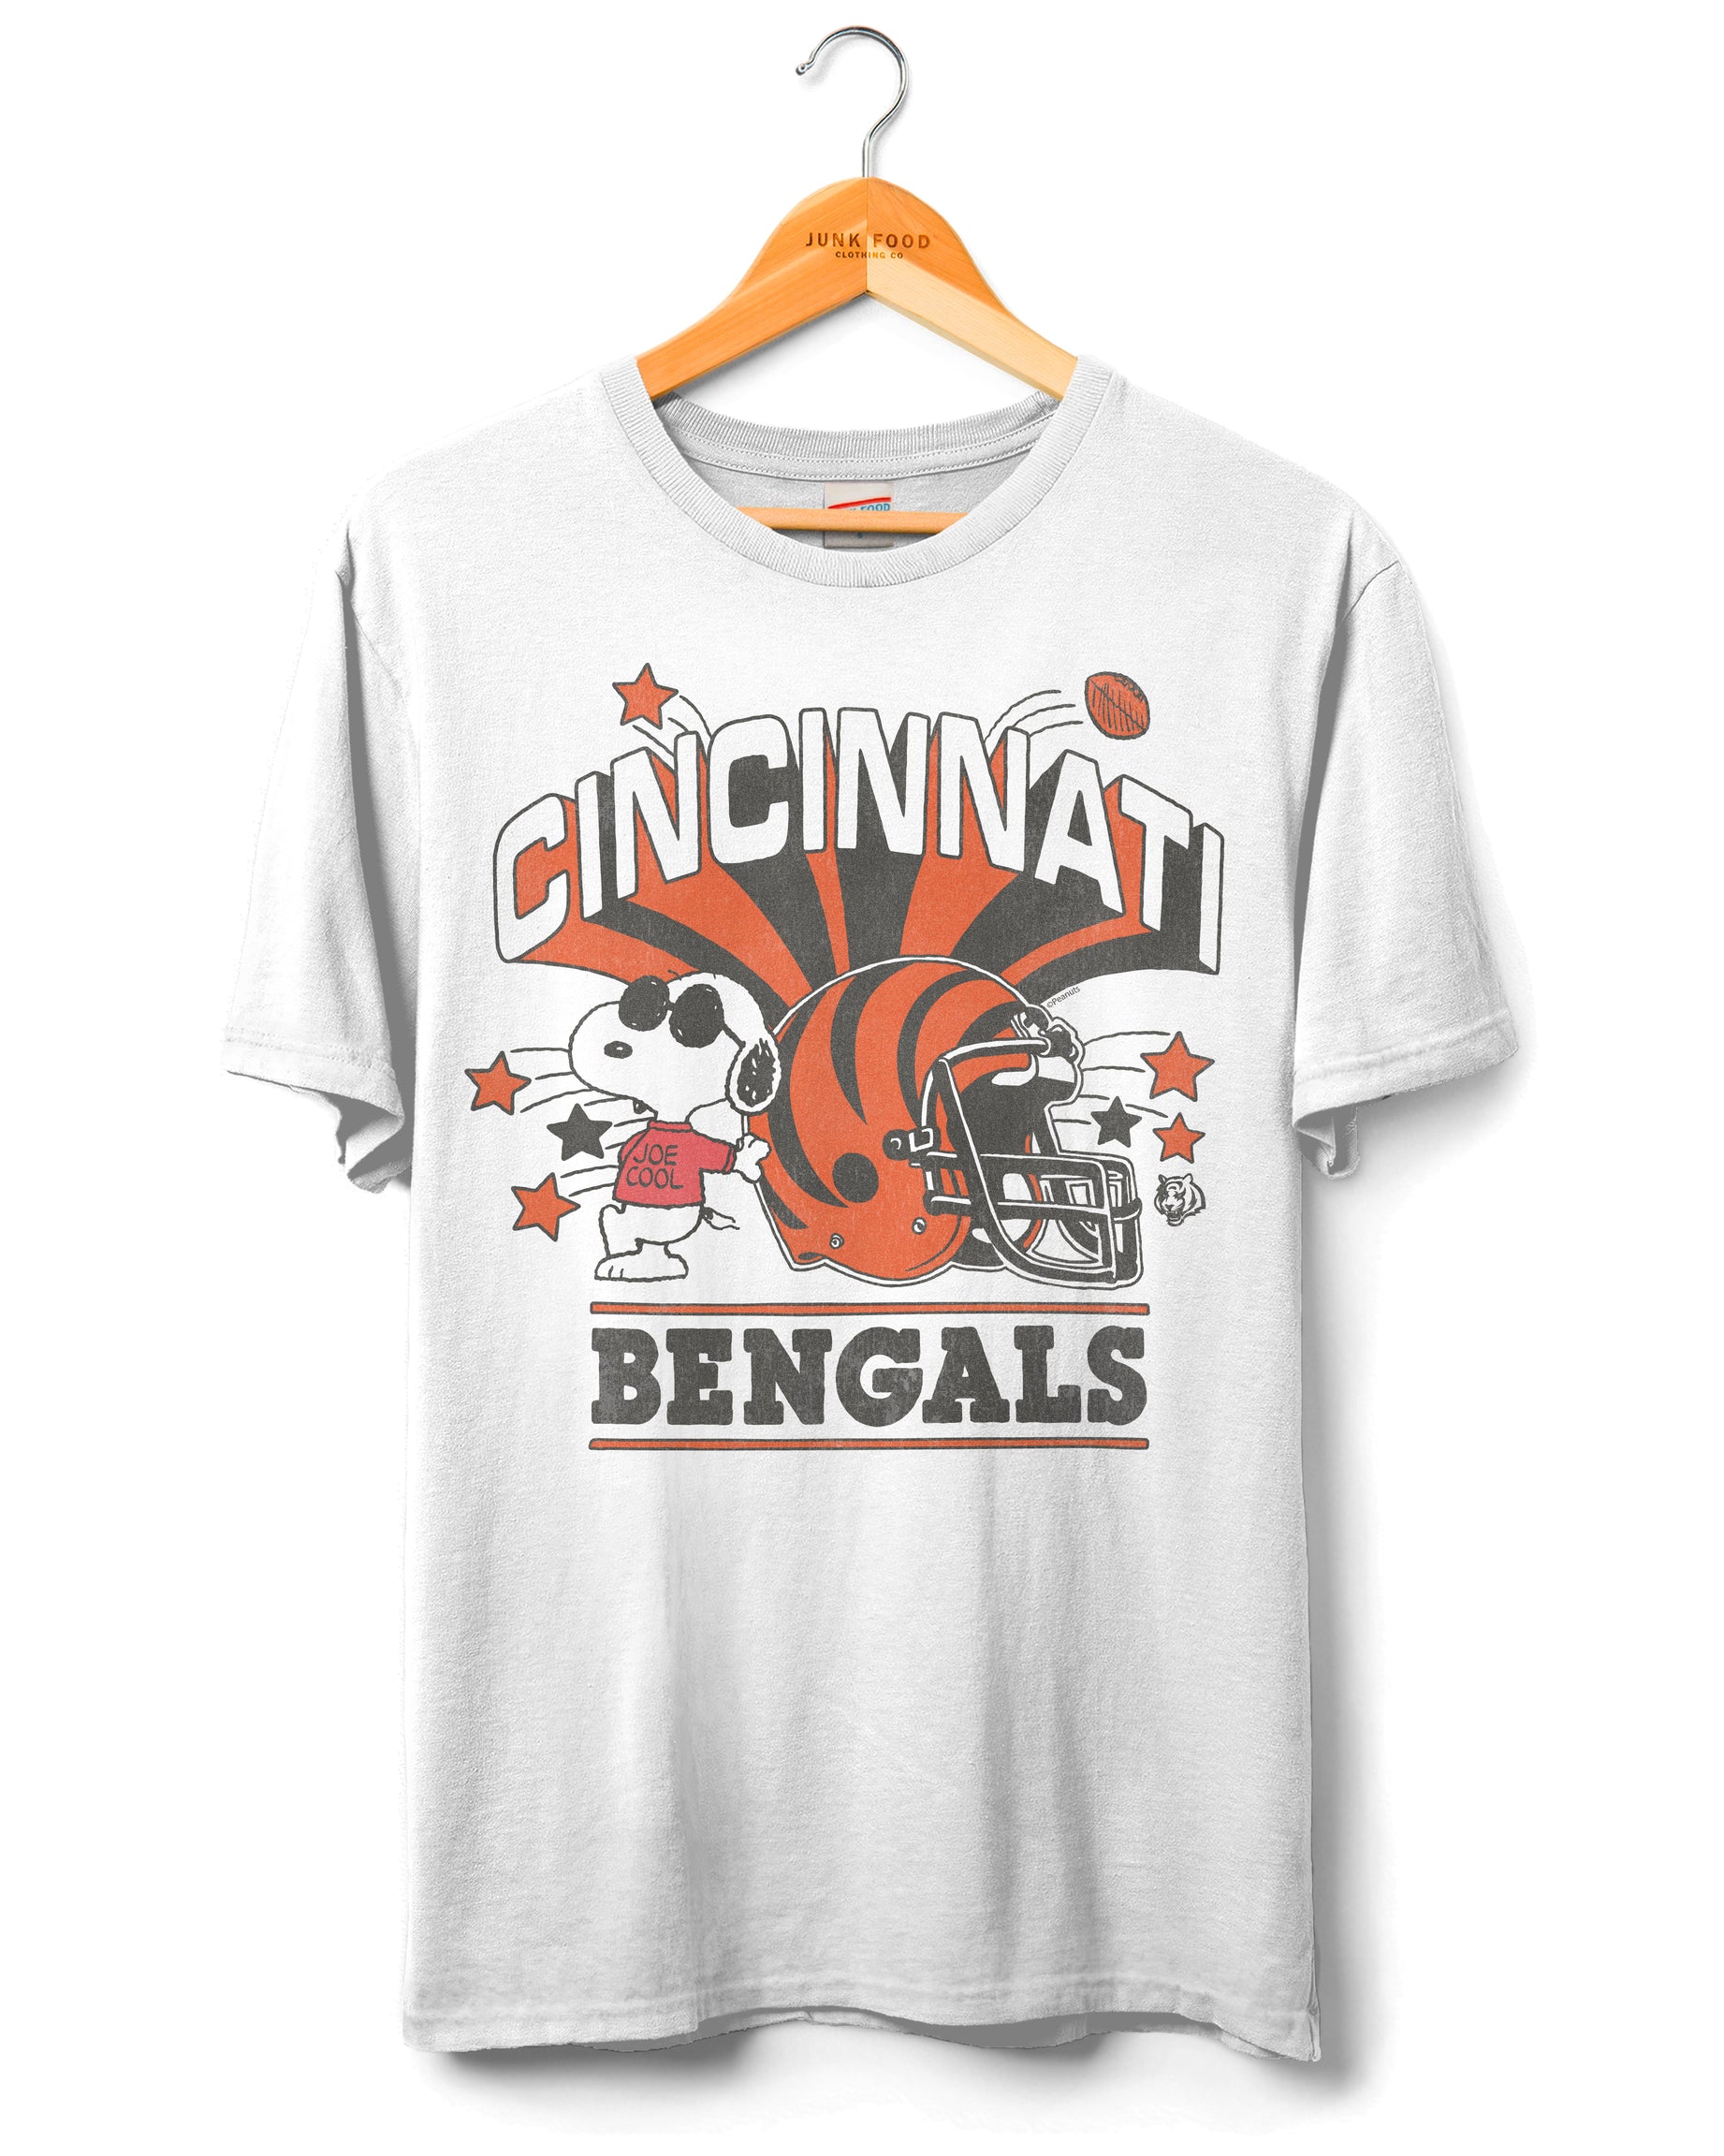 LOGO 7, Shirts, Vintage 9s Logo 7 Cincinnati Bengals Tshirt